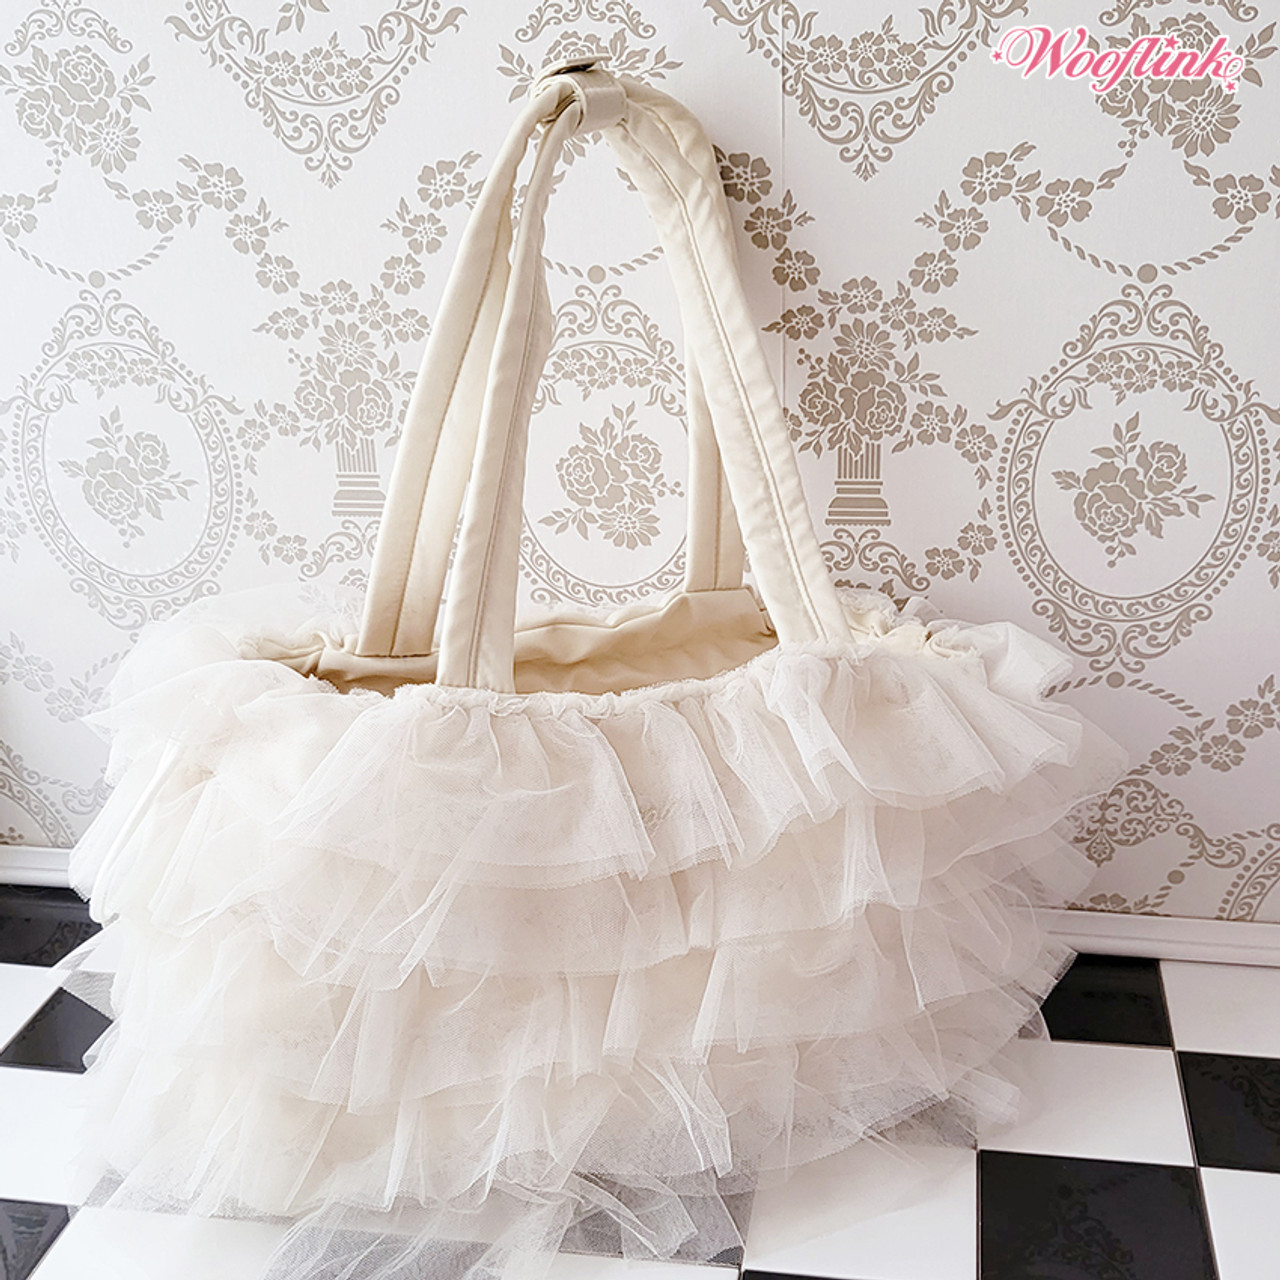 fairy handbag products for sale | eBay